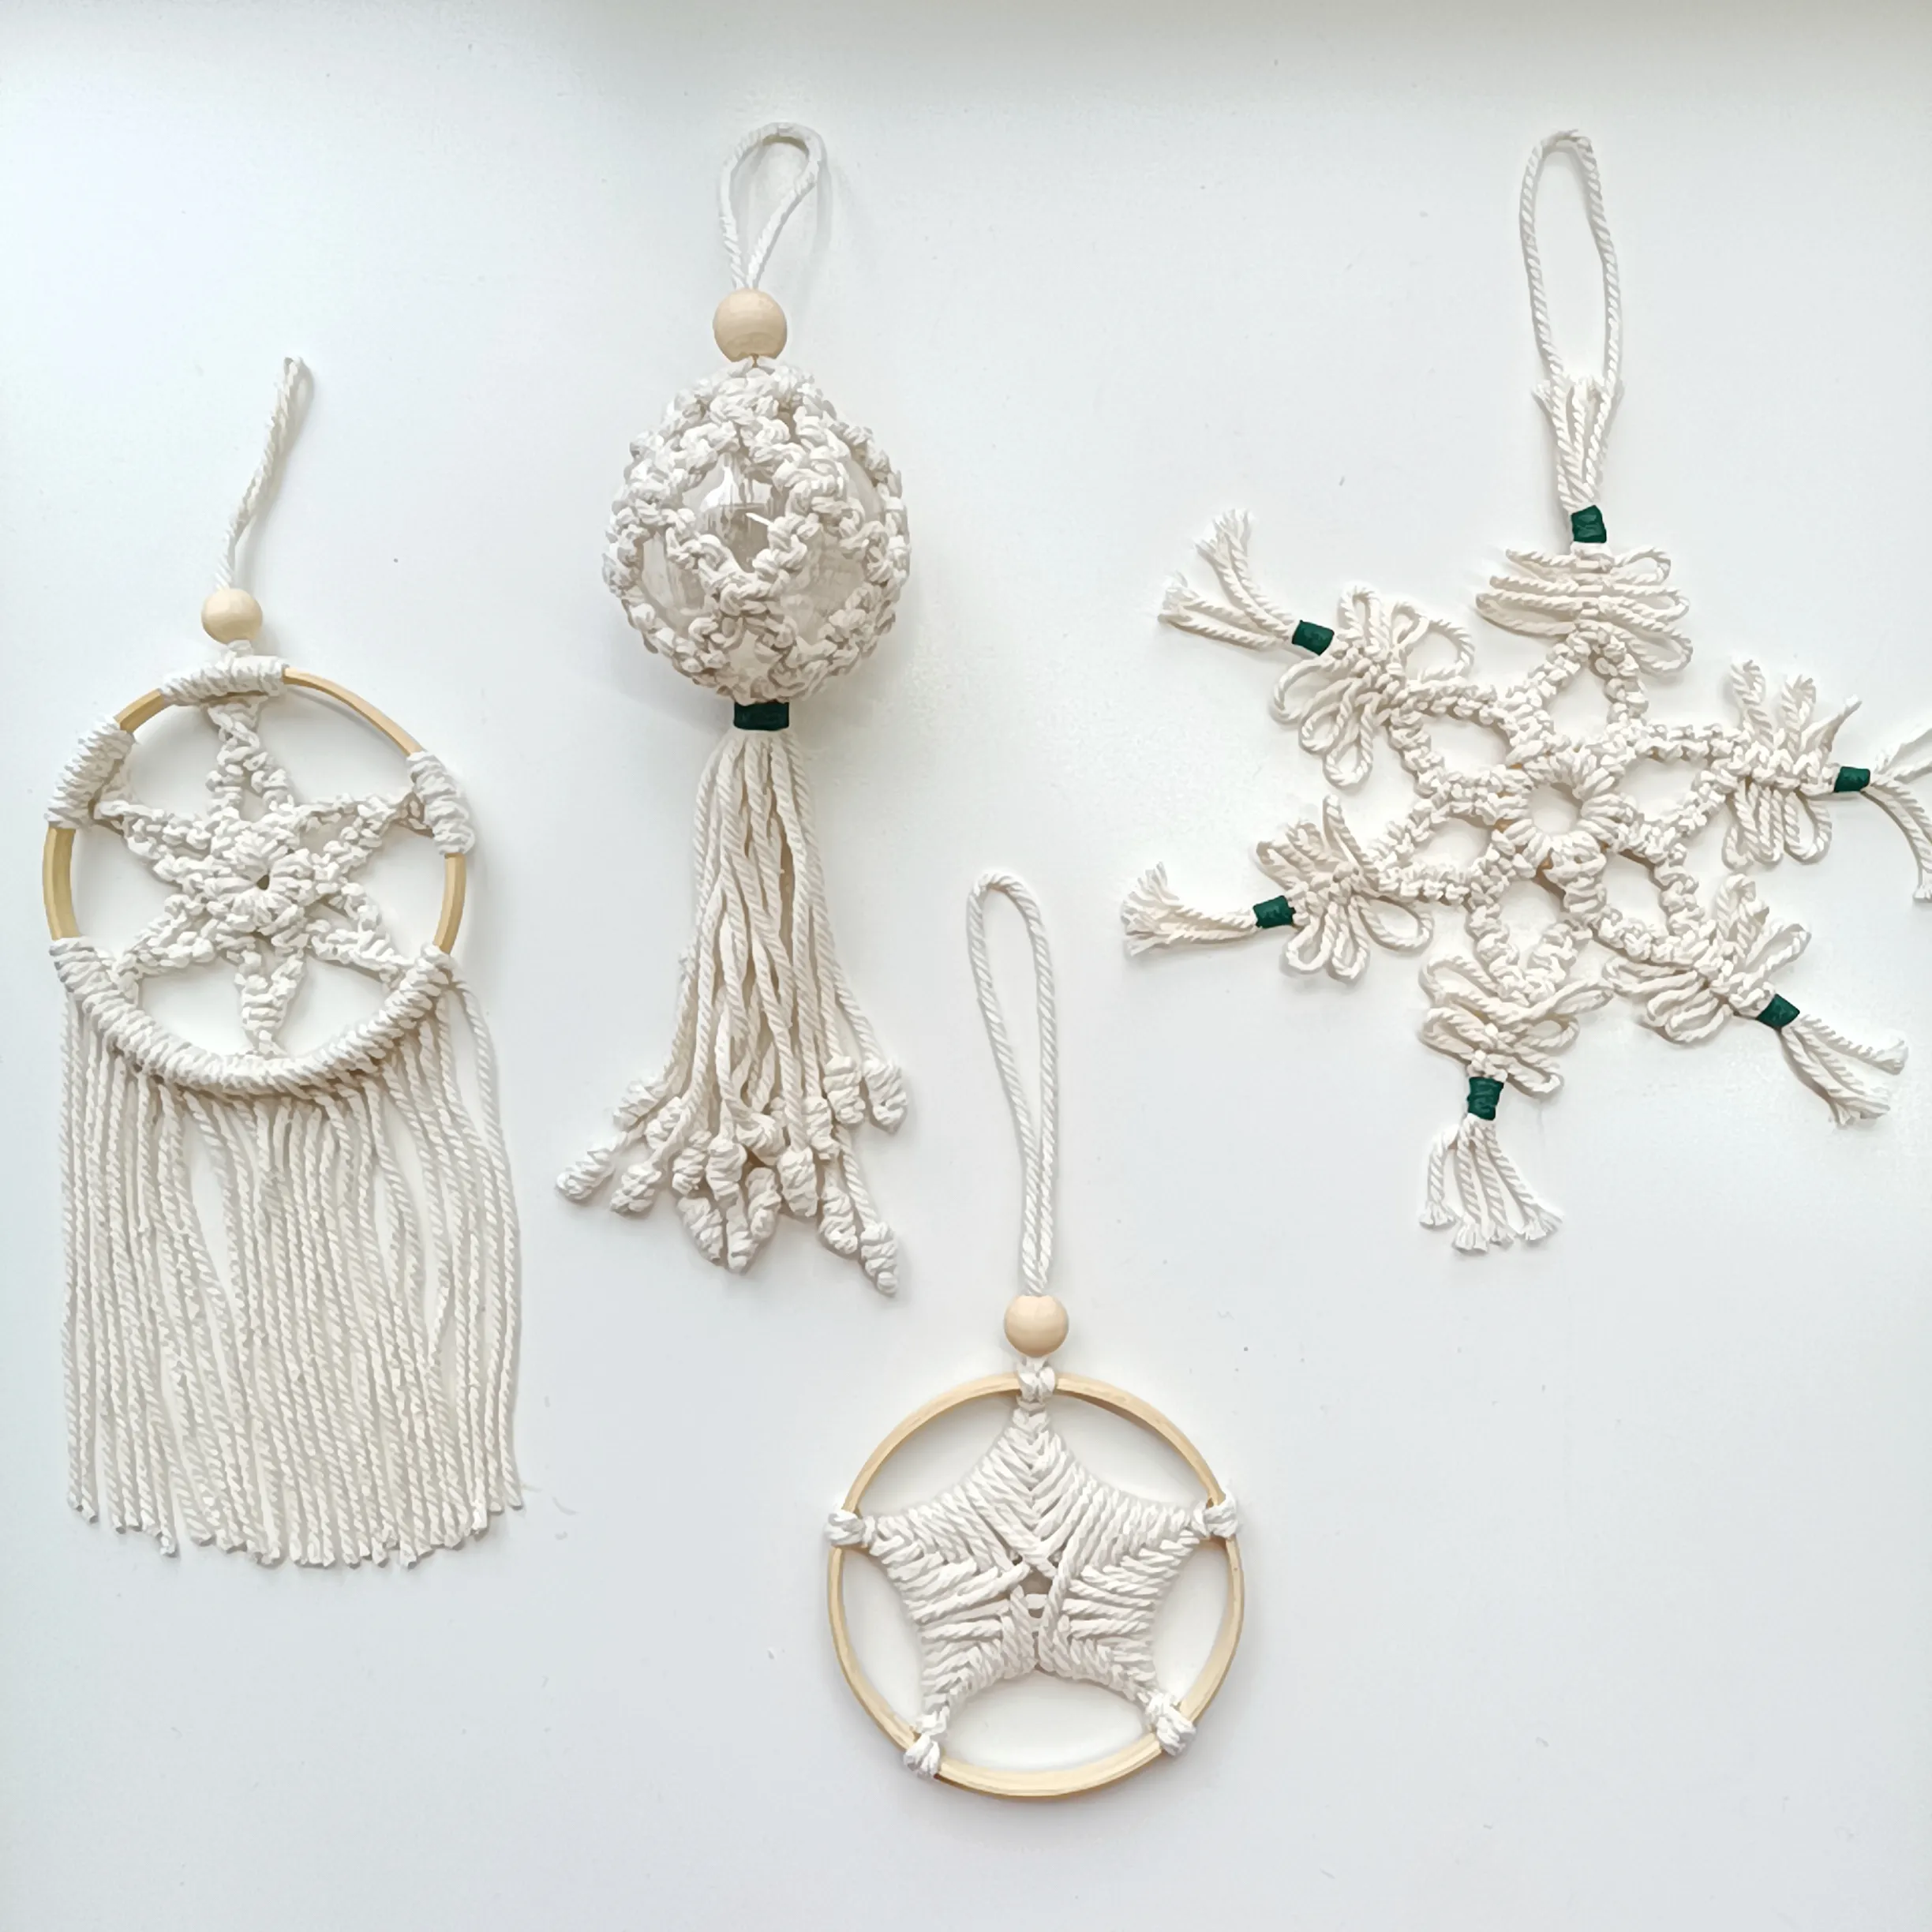 Customized Xmas Tree Cotton Ornaments Handmade Hanging Winter Decor Dream Catcher Christmas Ball Candy Leaf Ornament Set